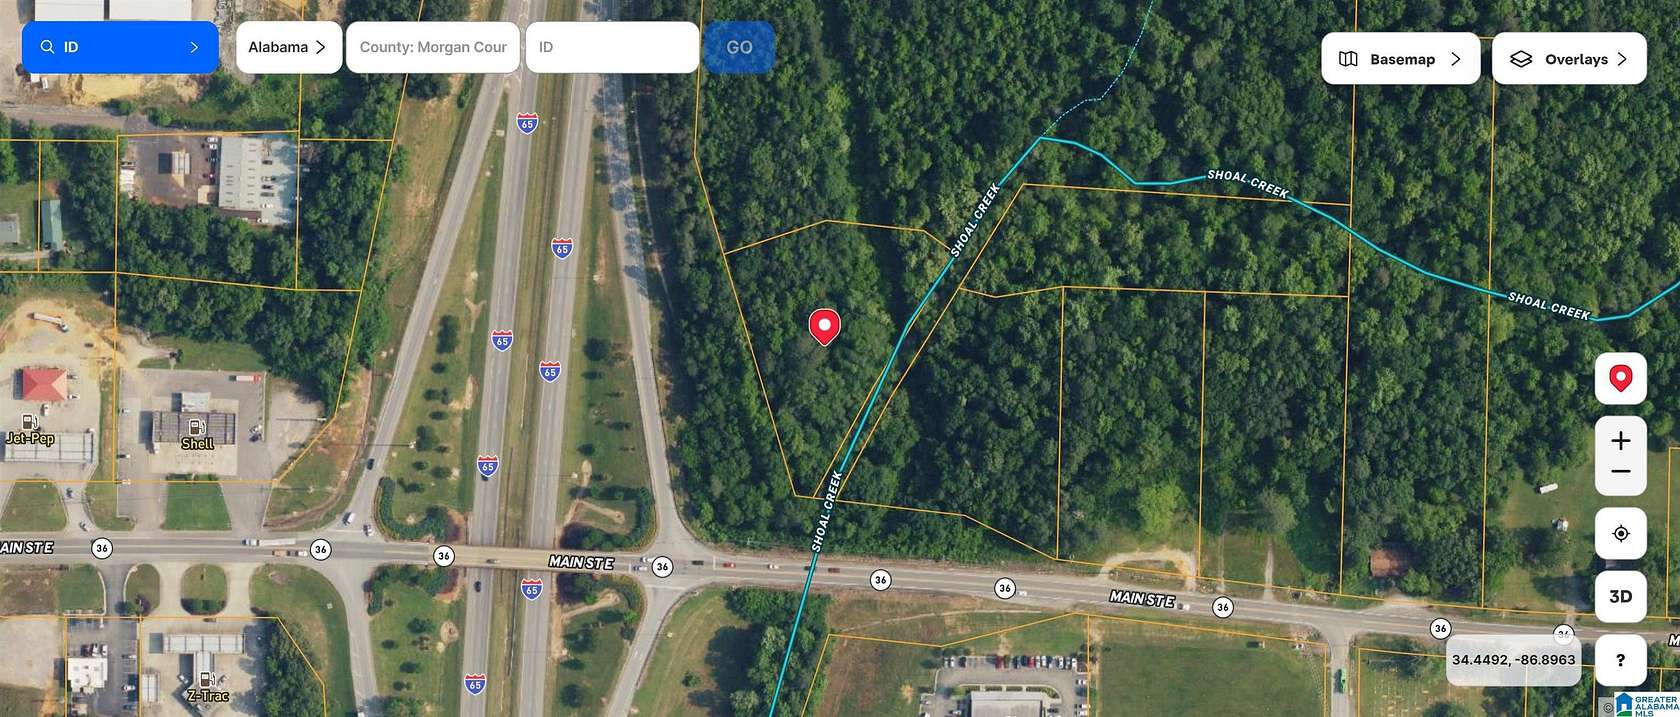 4.6 Acres of Land for Sale in Somerville, Alabama